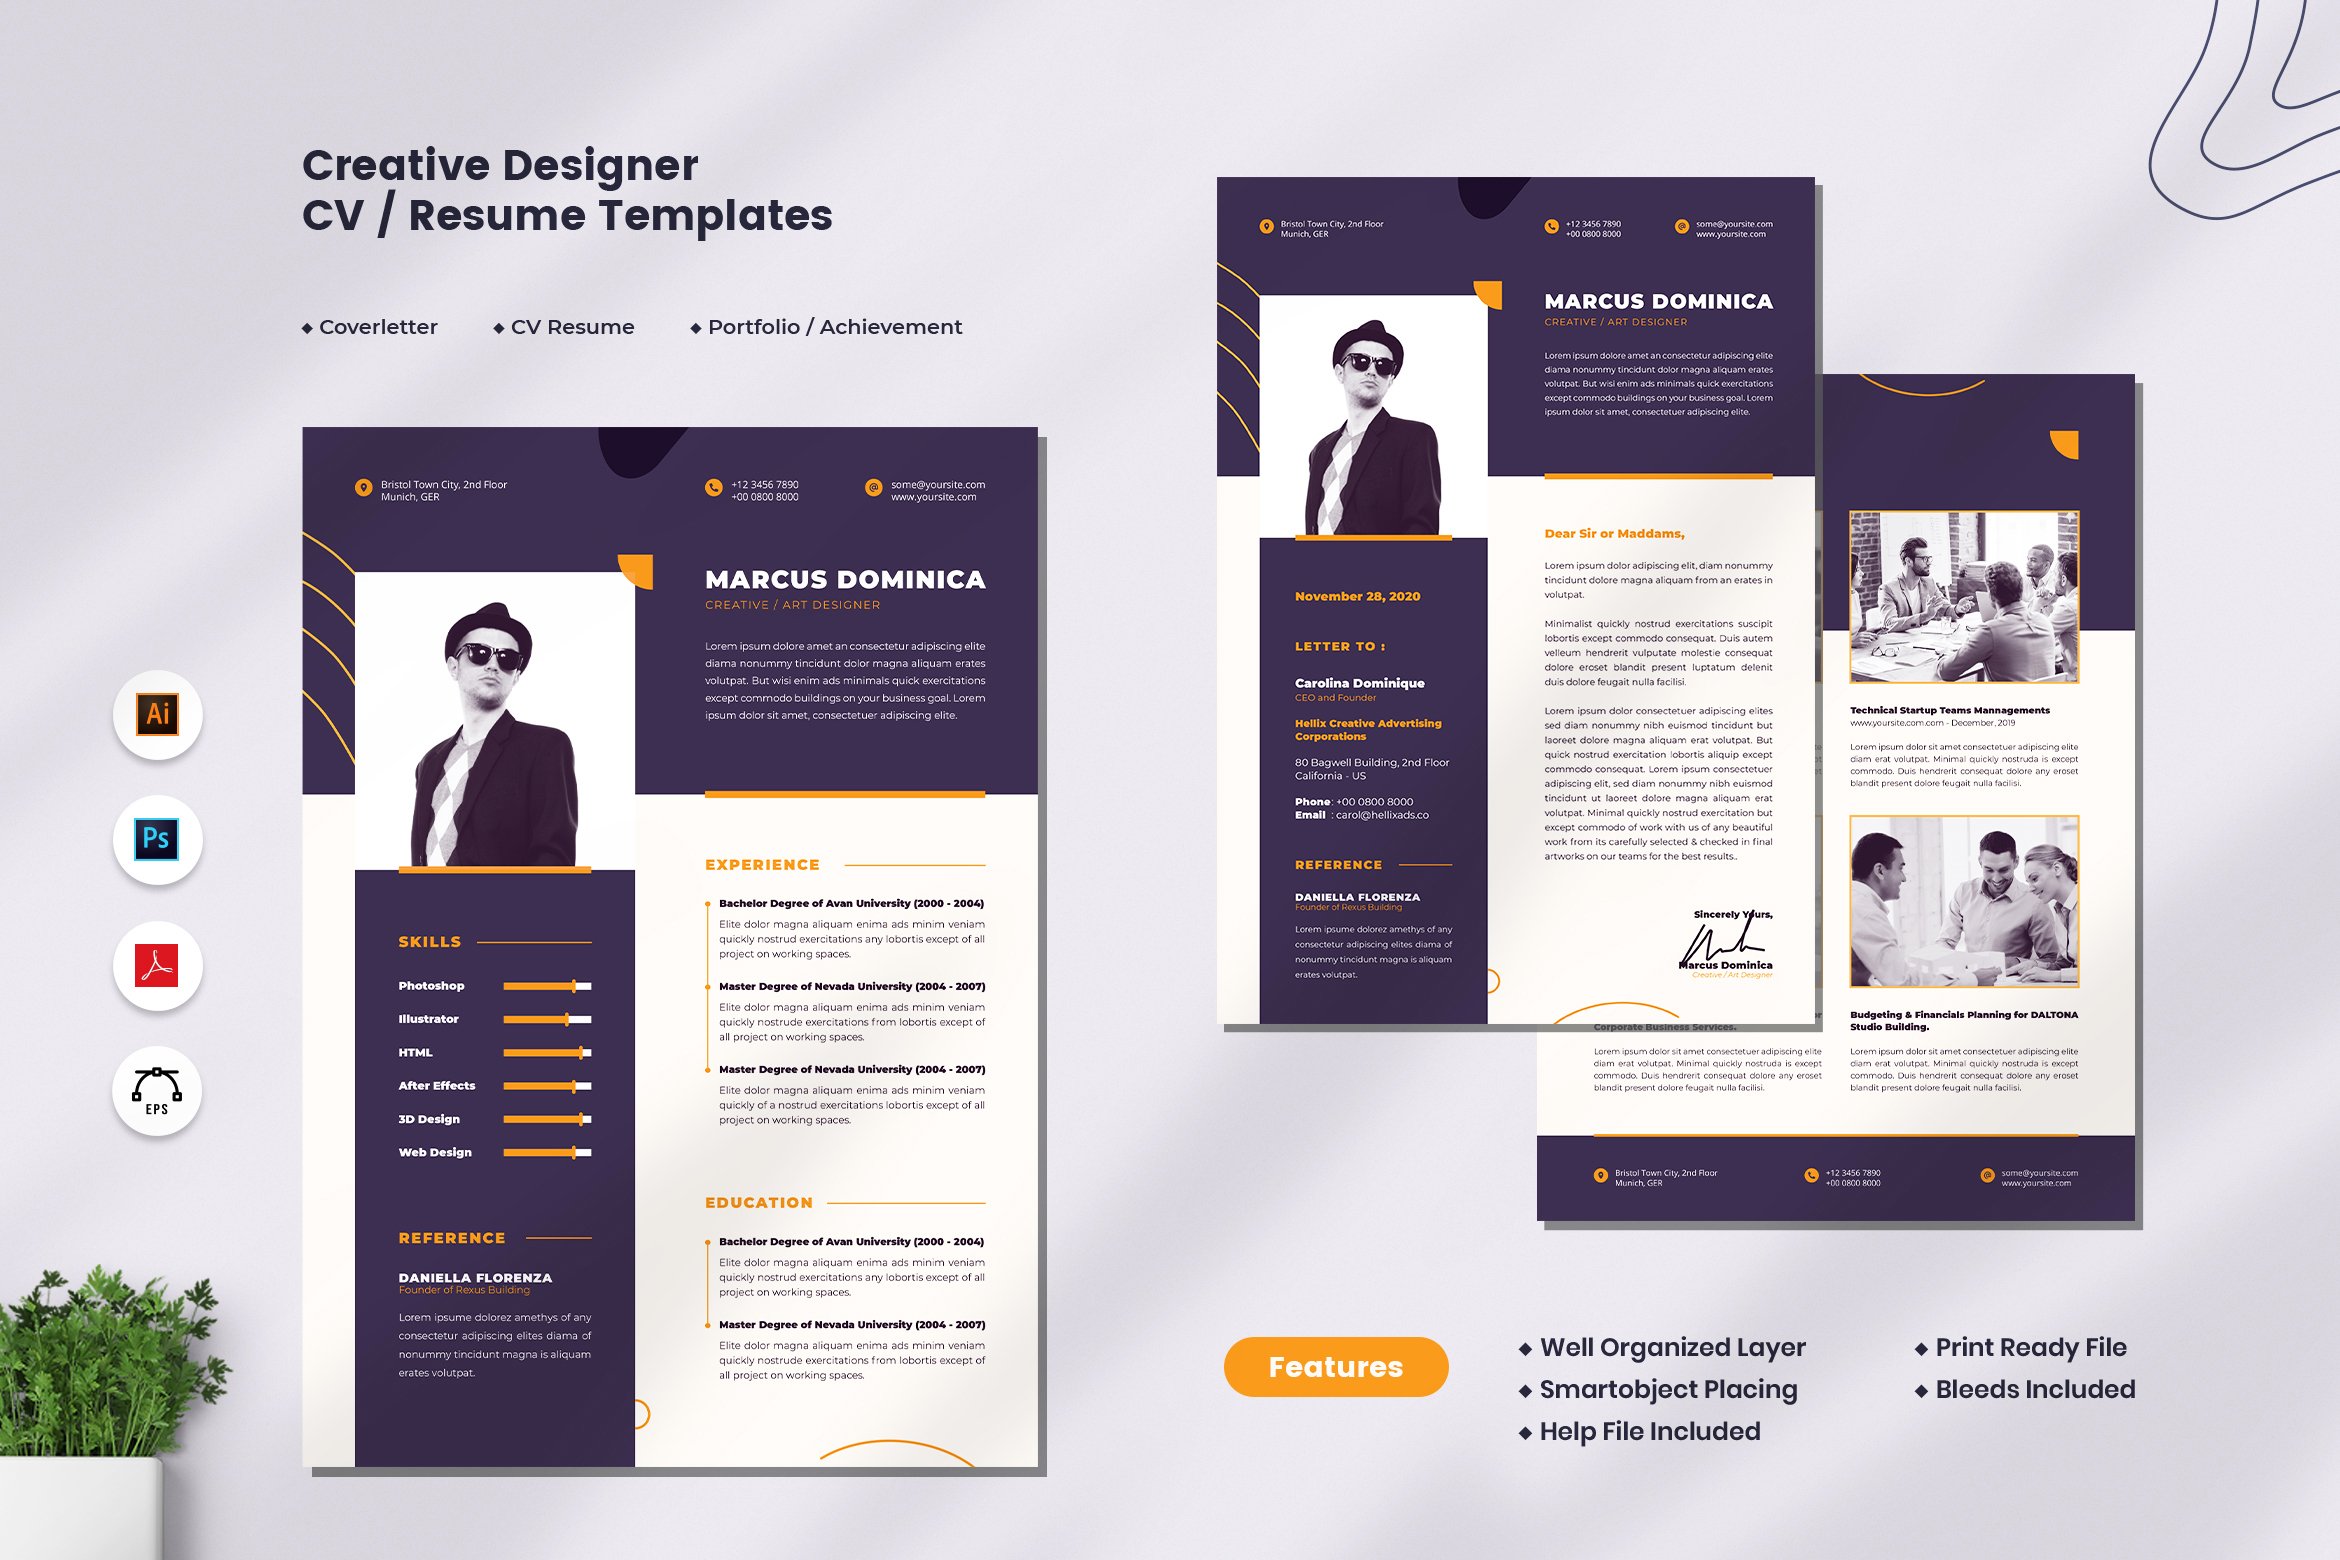 Creative Designer CV Resume cover image.